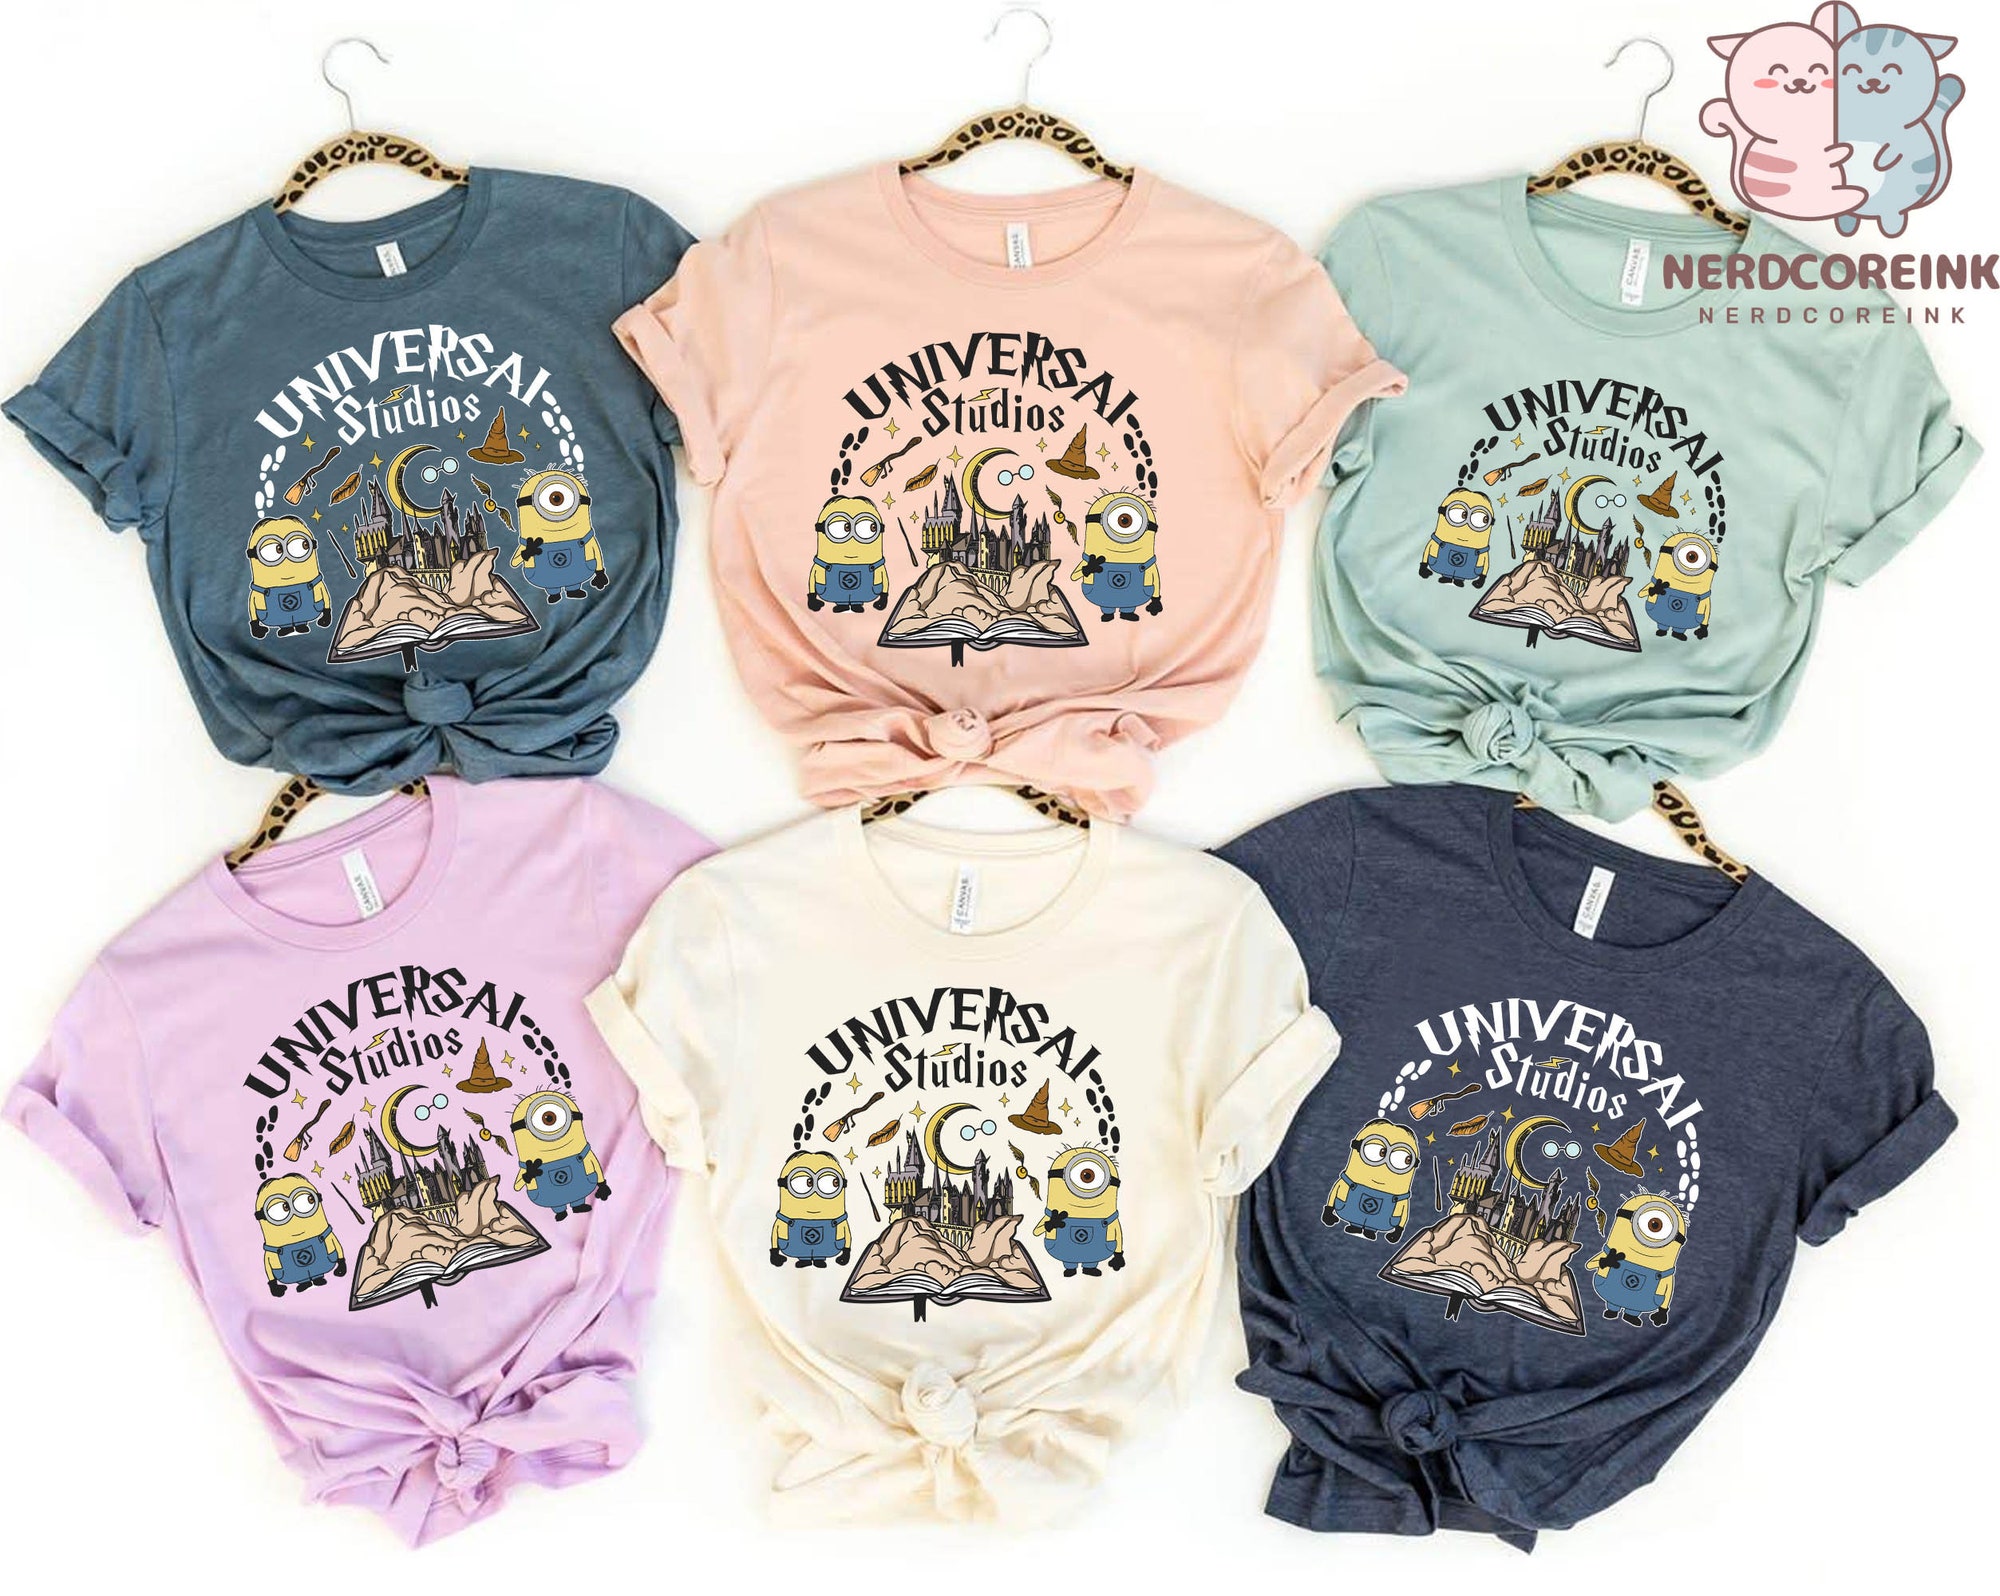 Discover Universal Studios Family Shirt, Universal Studios Group T-Shirts, Disney Universal Shirts, Disney Family Matching Shirts, Disney Group shirt